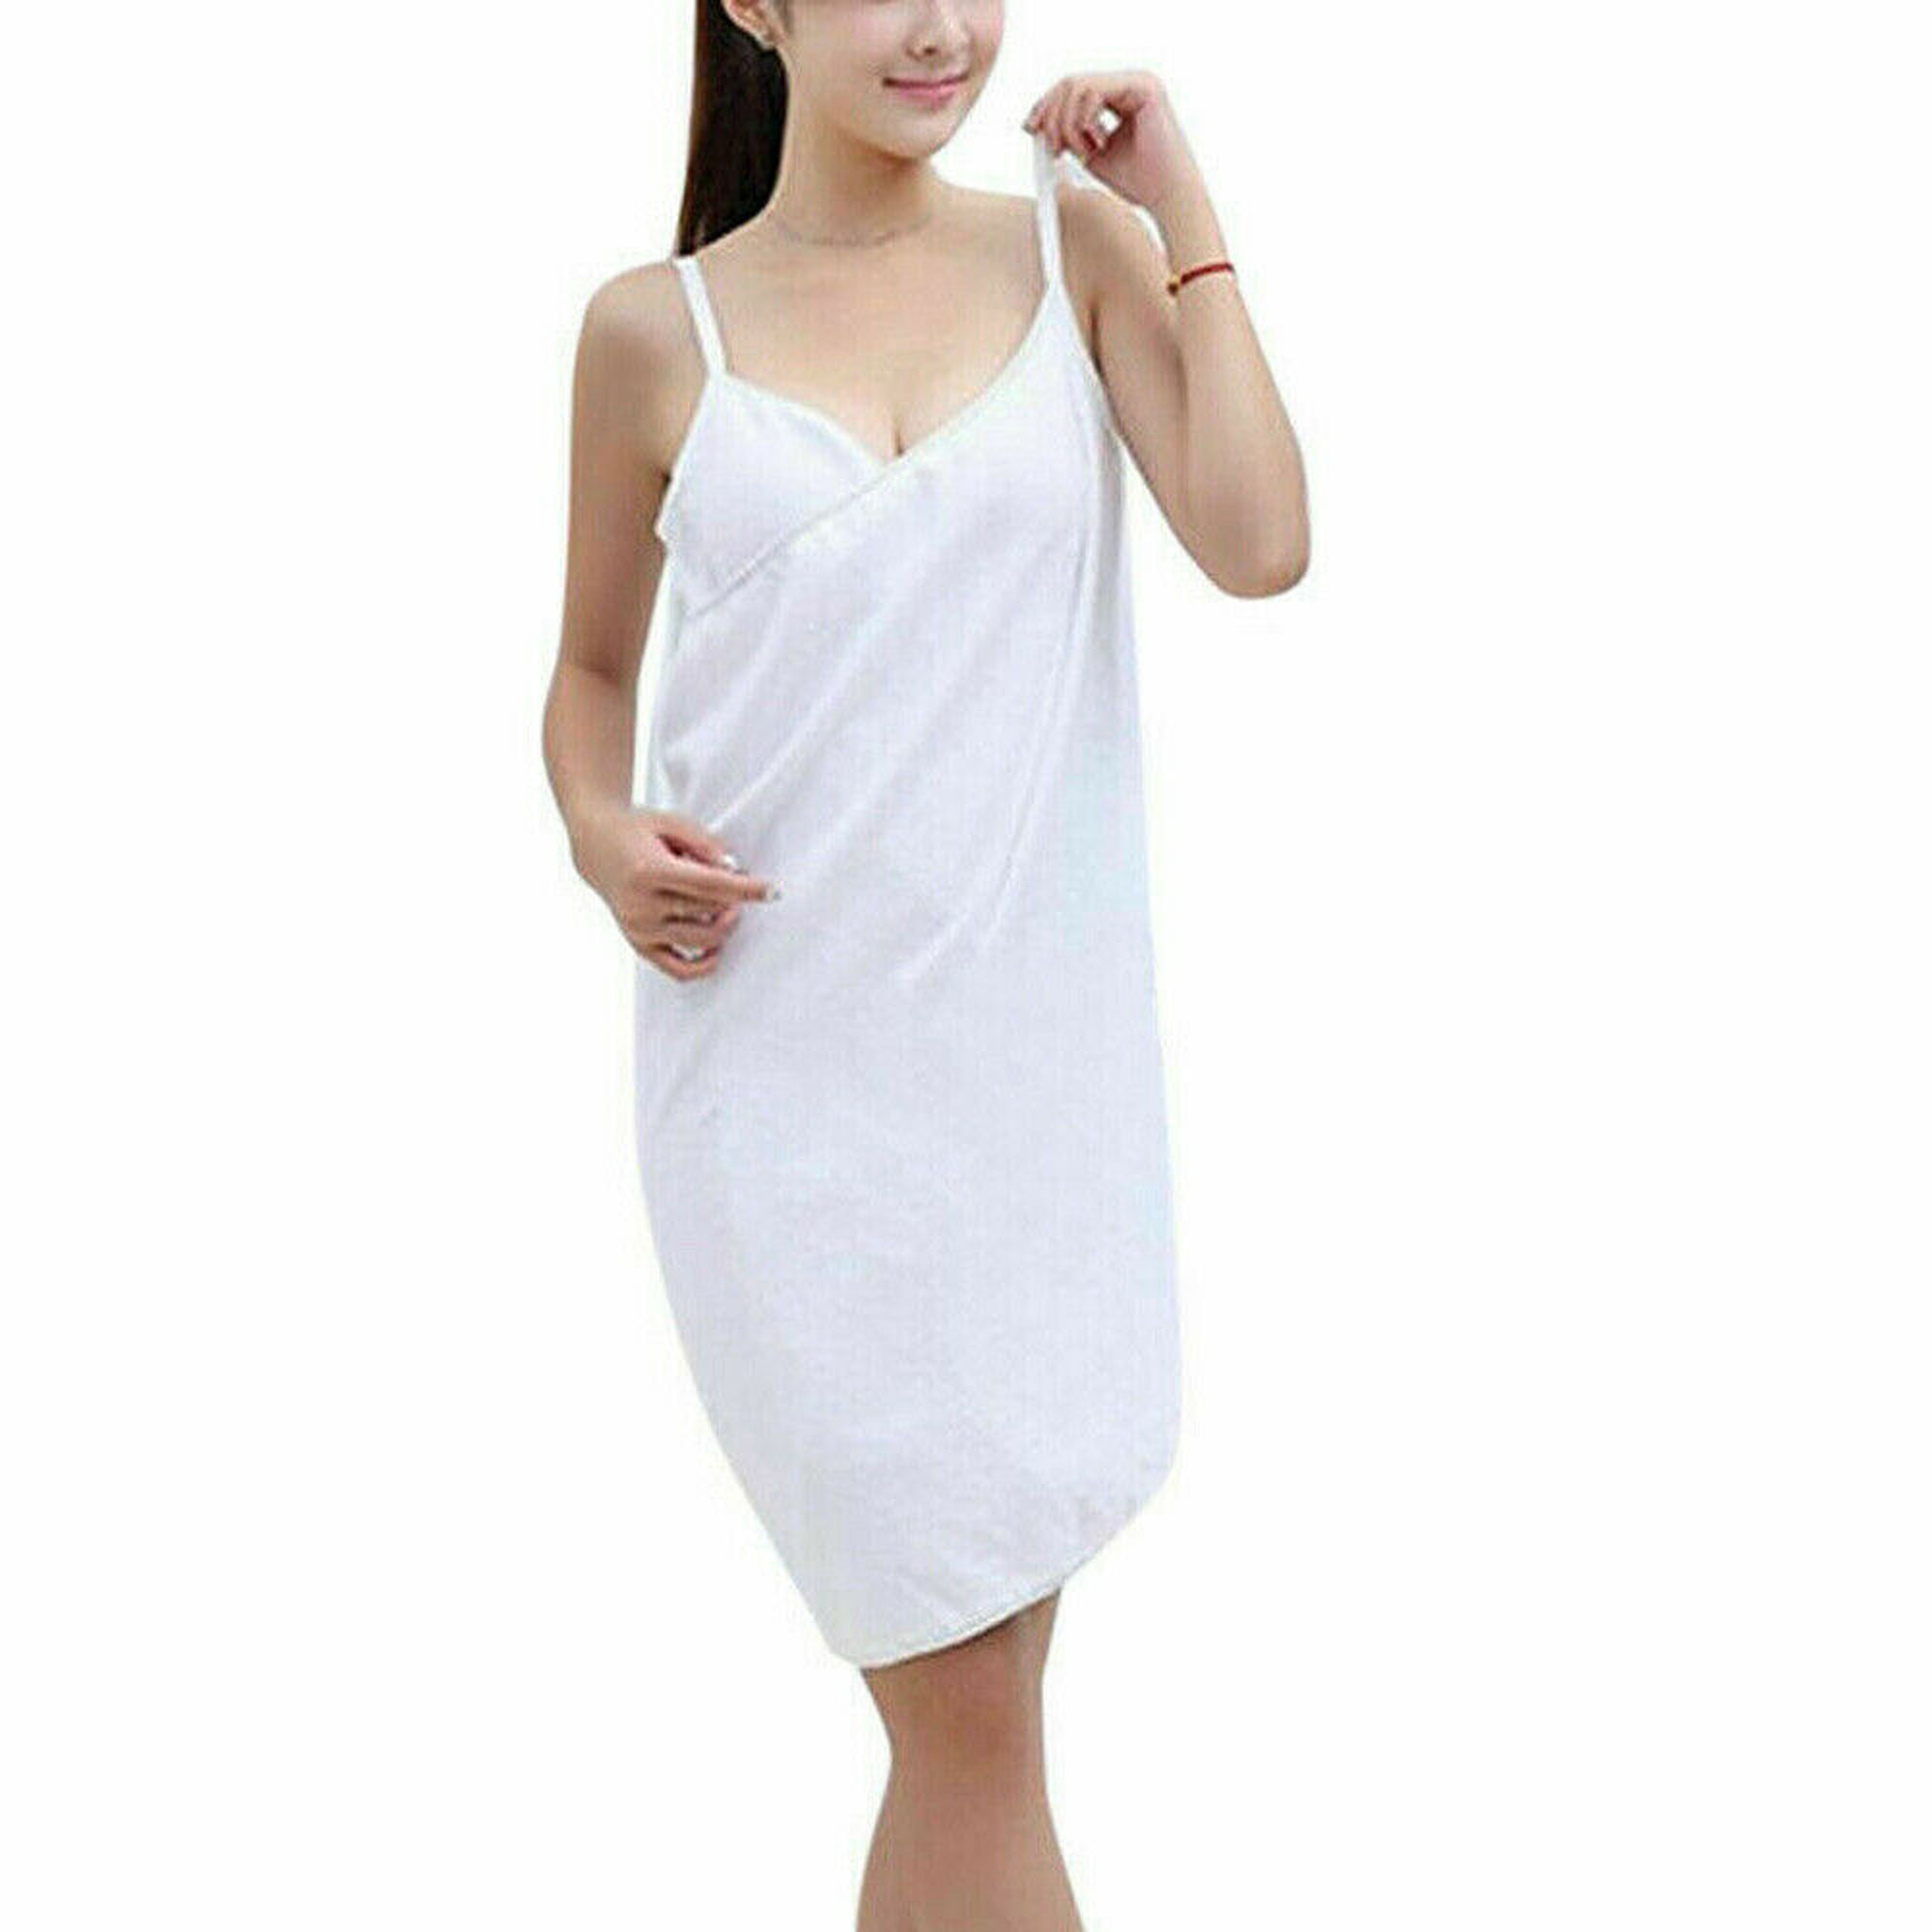 Towel dress